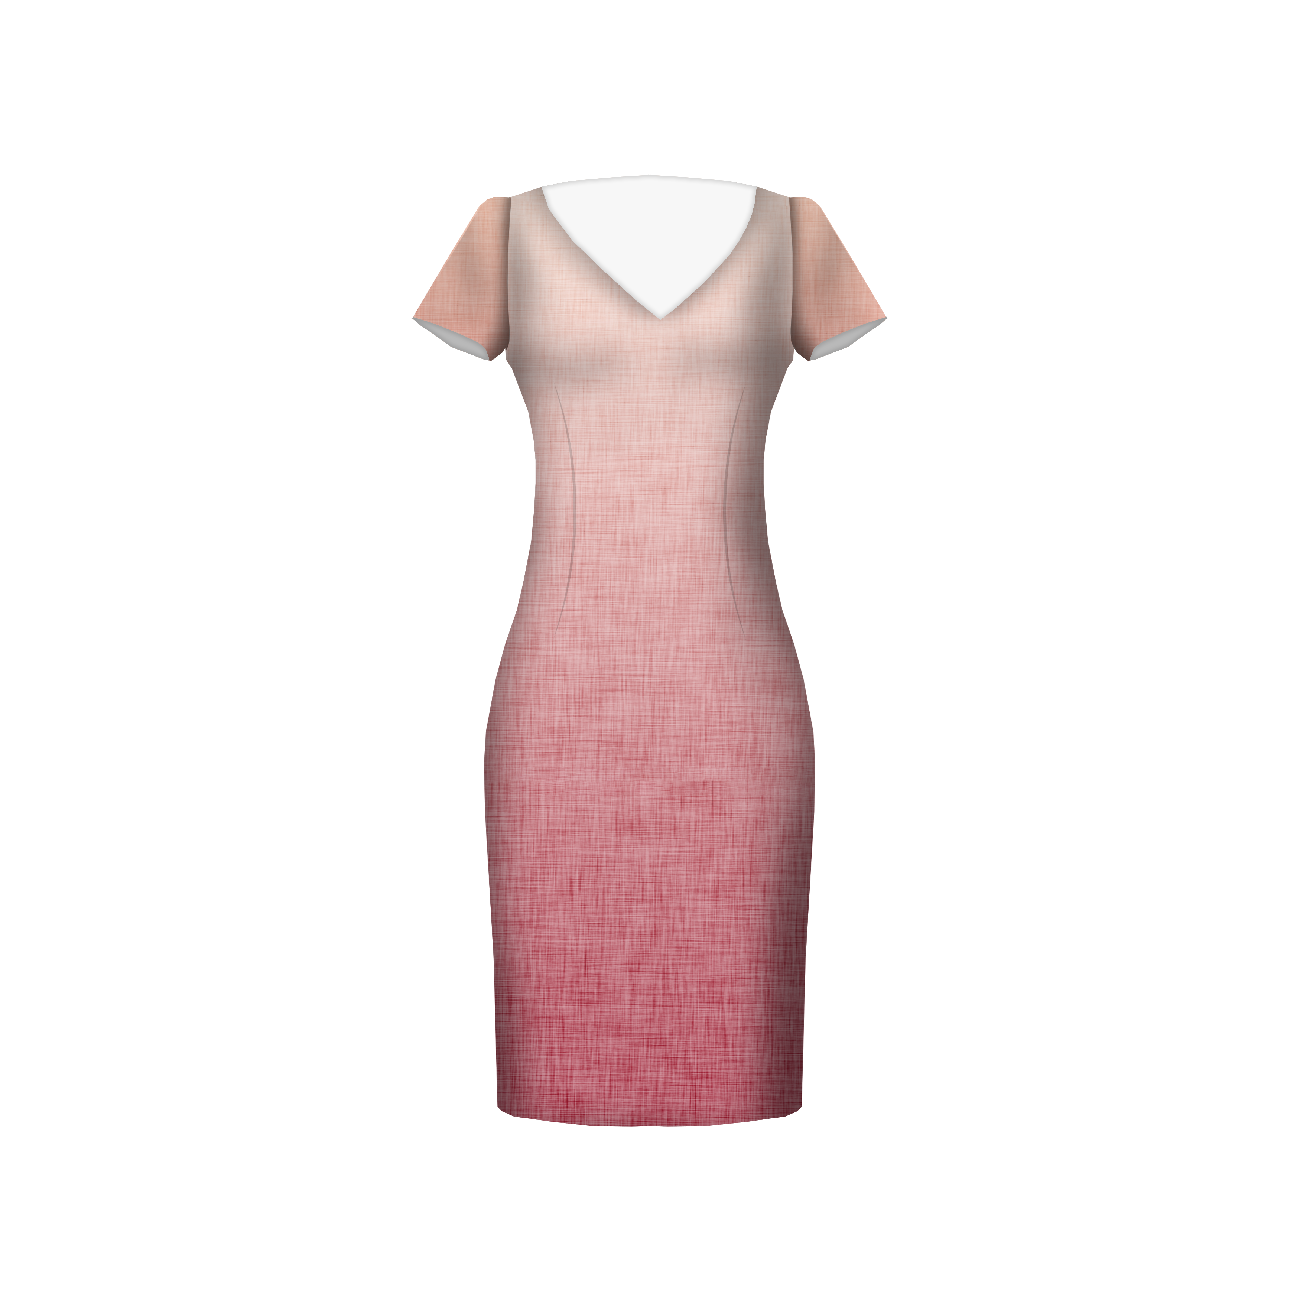 OMBRE / ACID WASH - fuchsia (pale pink) - dress panel TE210